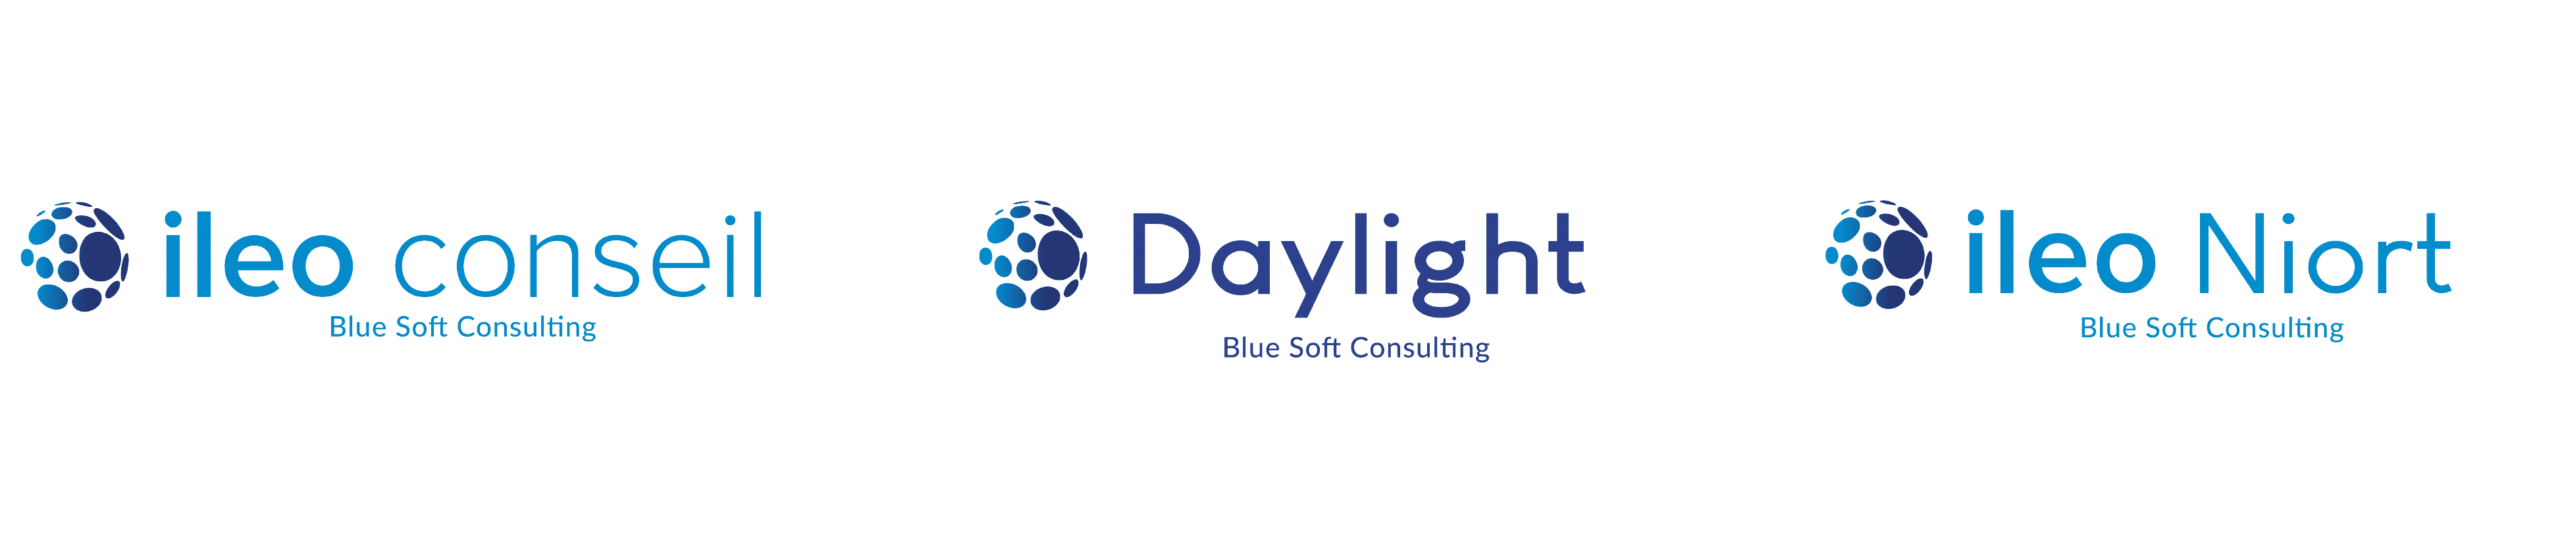 Blue Soft Consulting logos